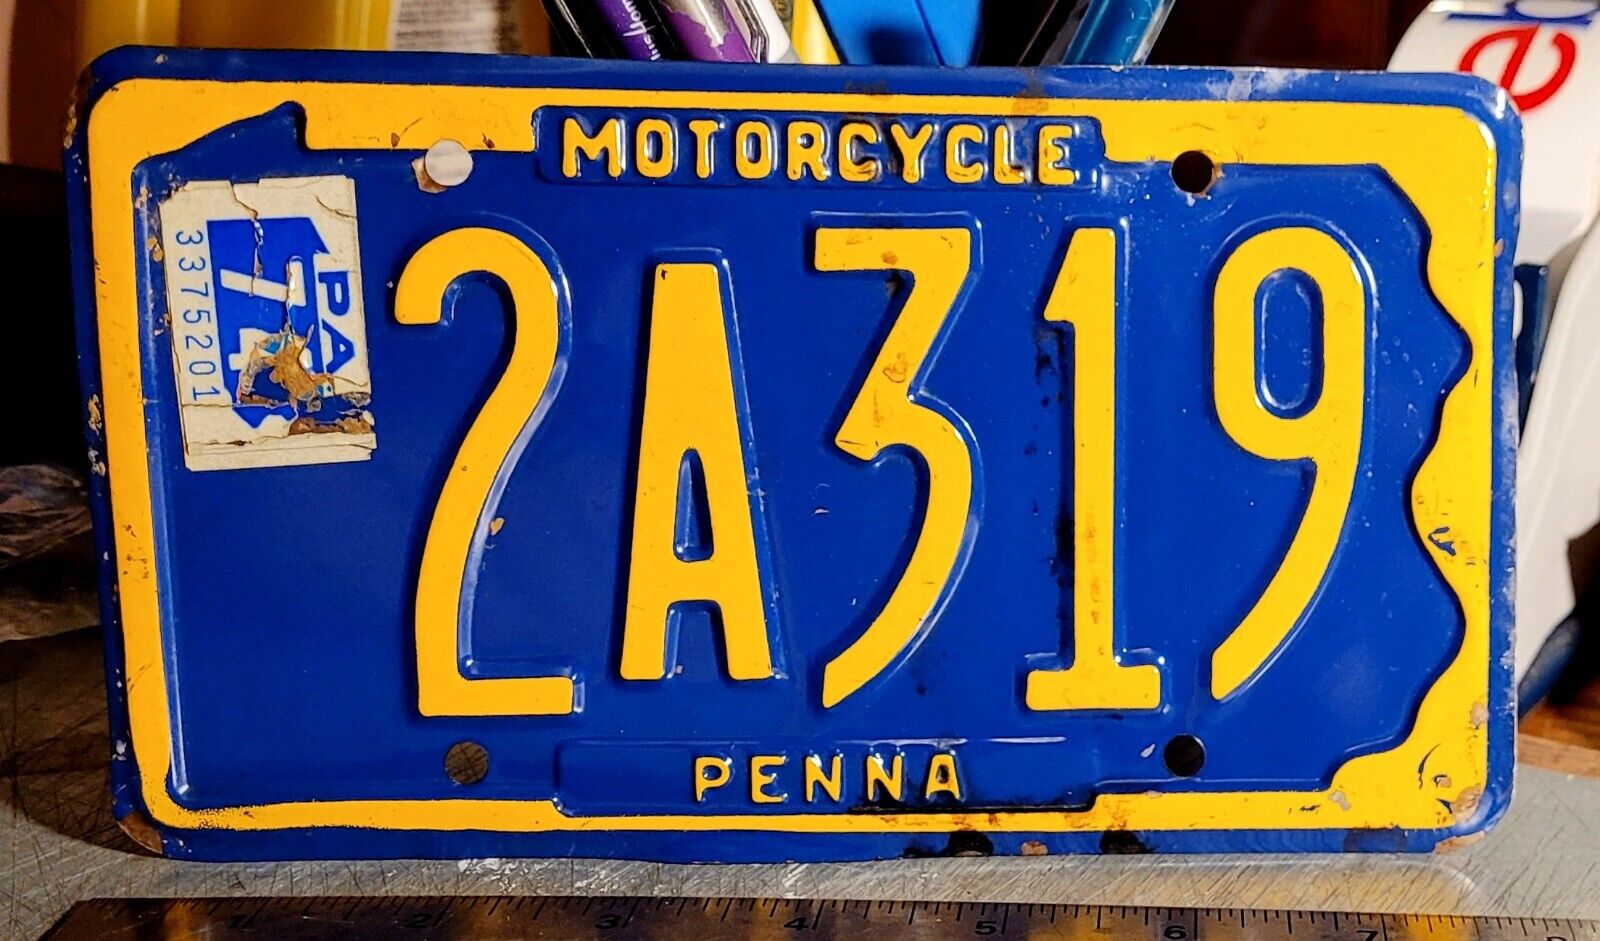 🏍 - PENNSYLVANIA - 1974 motorcycle license plate - original as shown